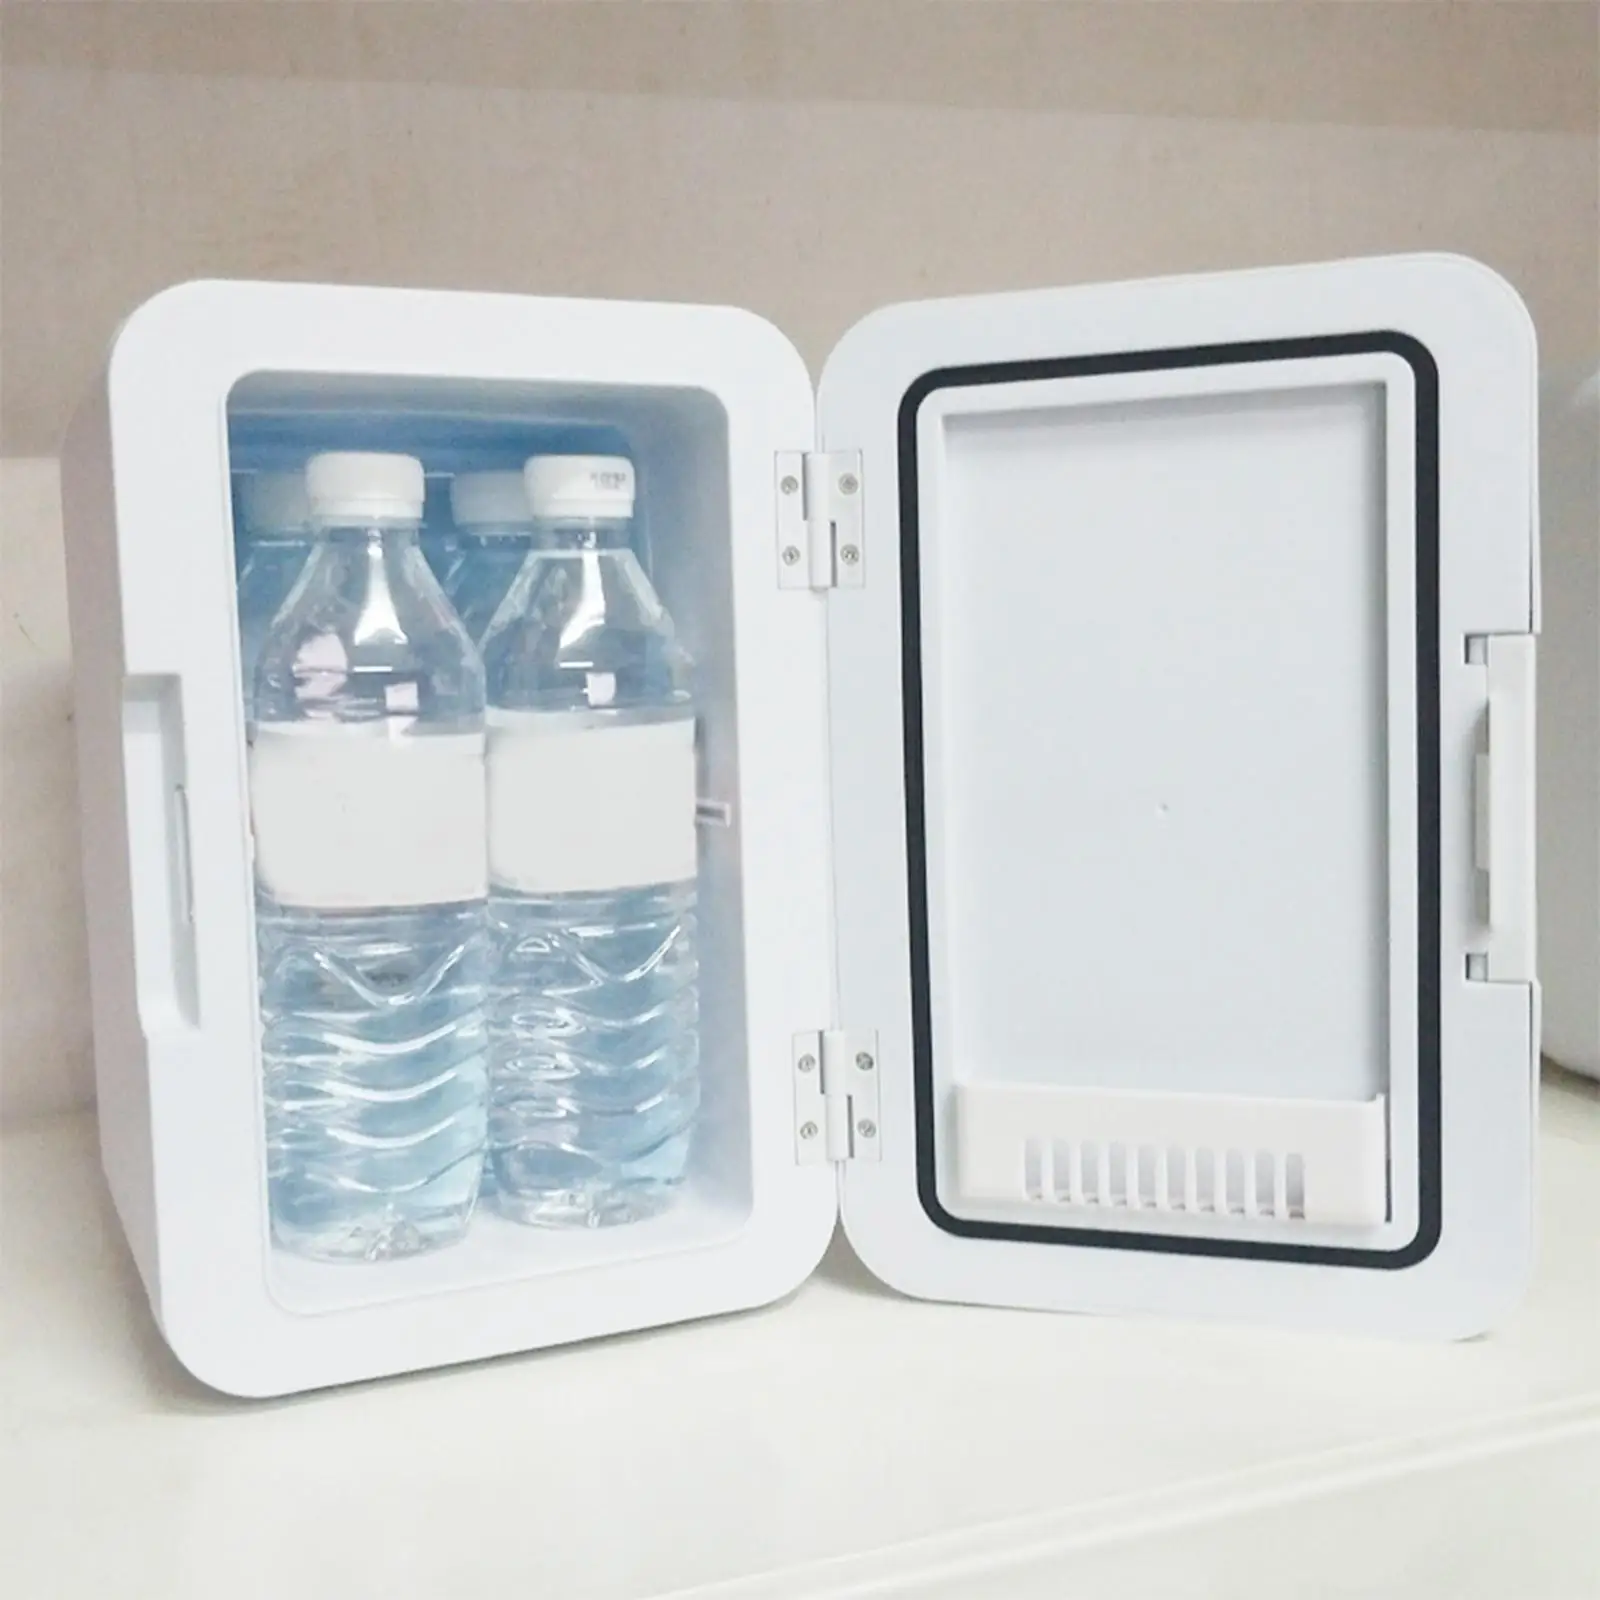 8 Liter Car Refrigerator Dual Use PP Freezer Low Energy Consumption 12V Mini Fridge for Auto Drinks Cosmetics Skincare Travel